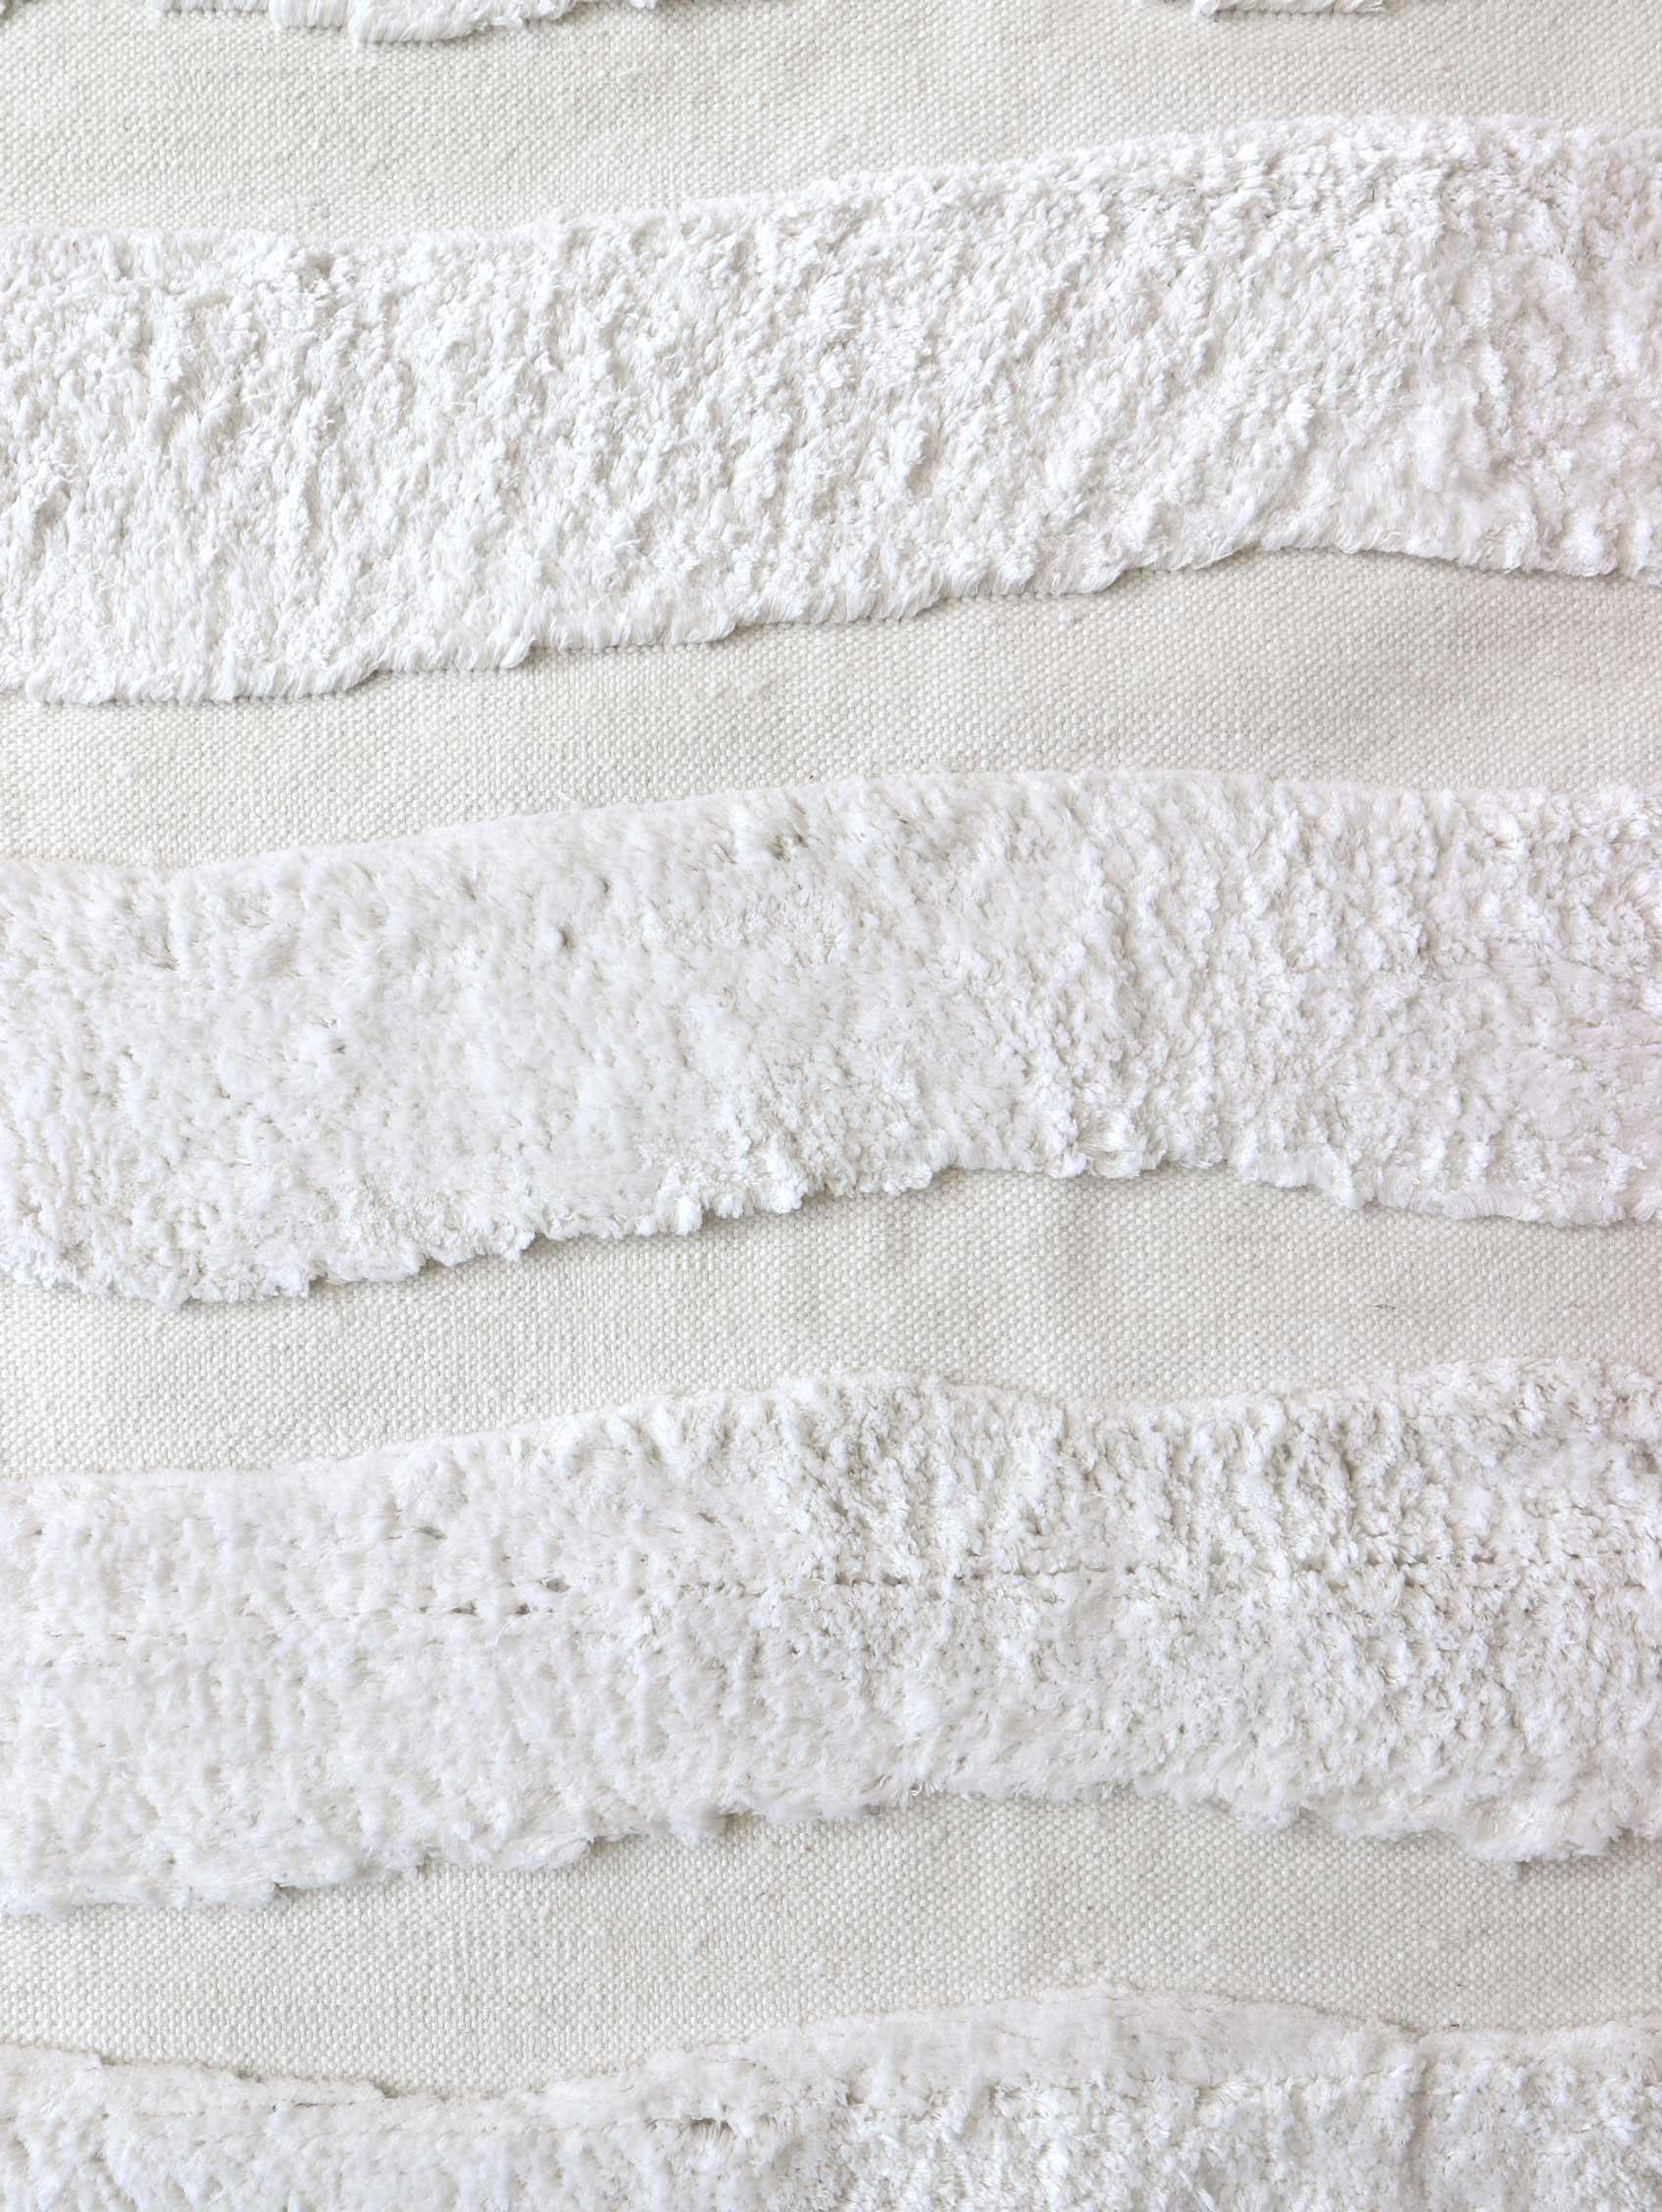 Rug pattern: Bold Stripe - Lefko White
Material: Merino Wool Pile/ New Zealand Wool Flat-weave
Quality: Wool Flat-weave & Moroccan Pile, 10mm pile, handwoven 
Size: 6’-0